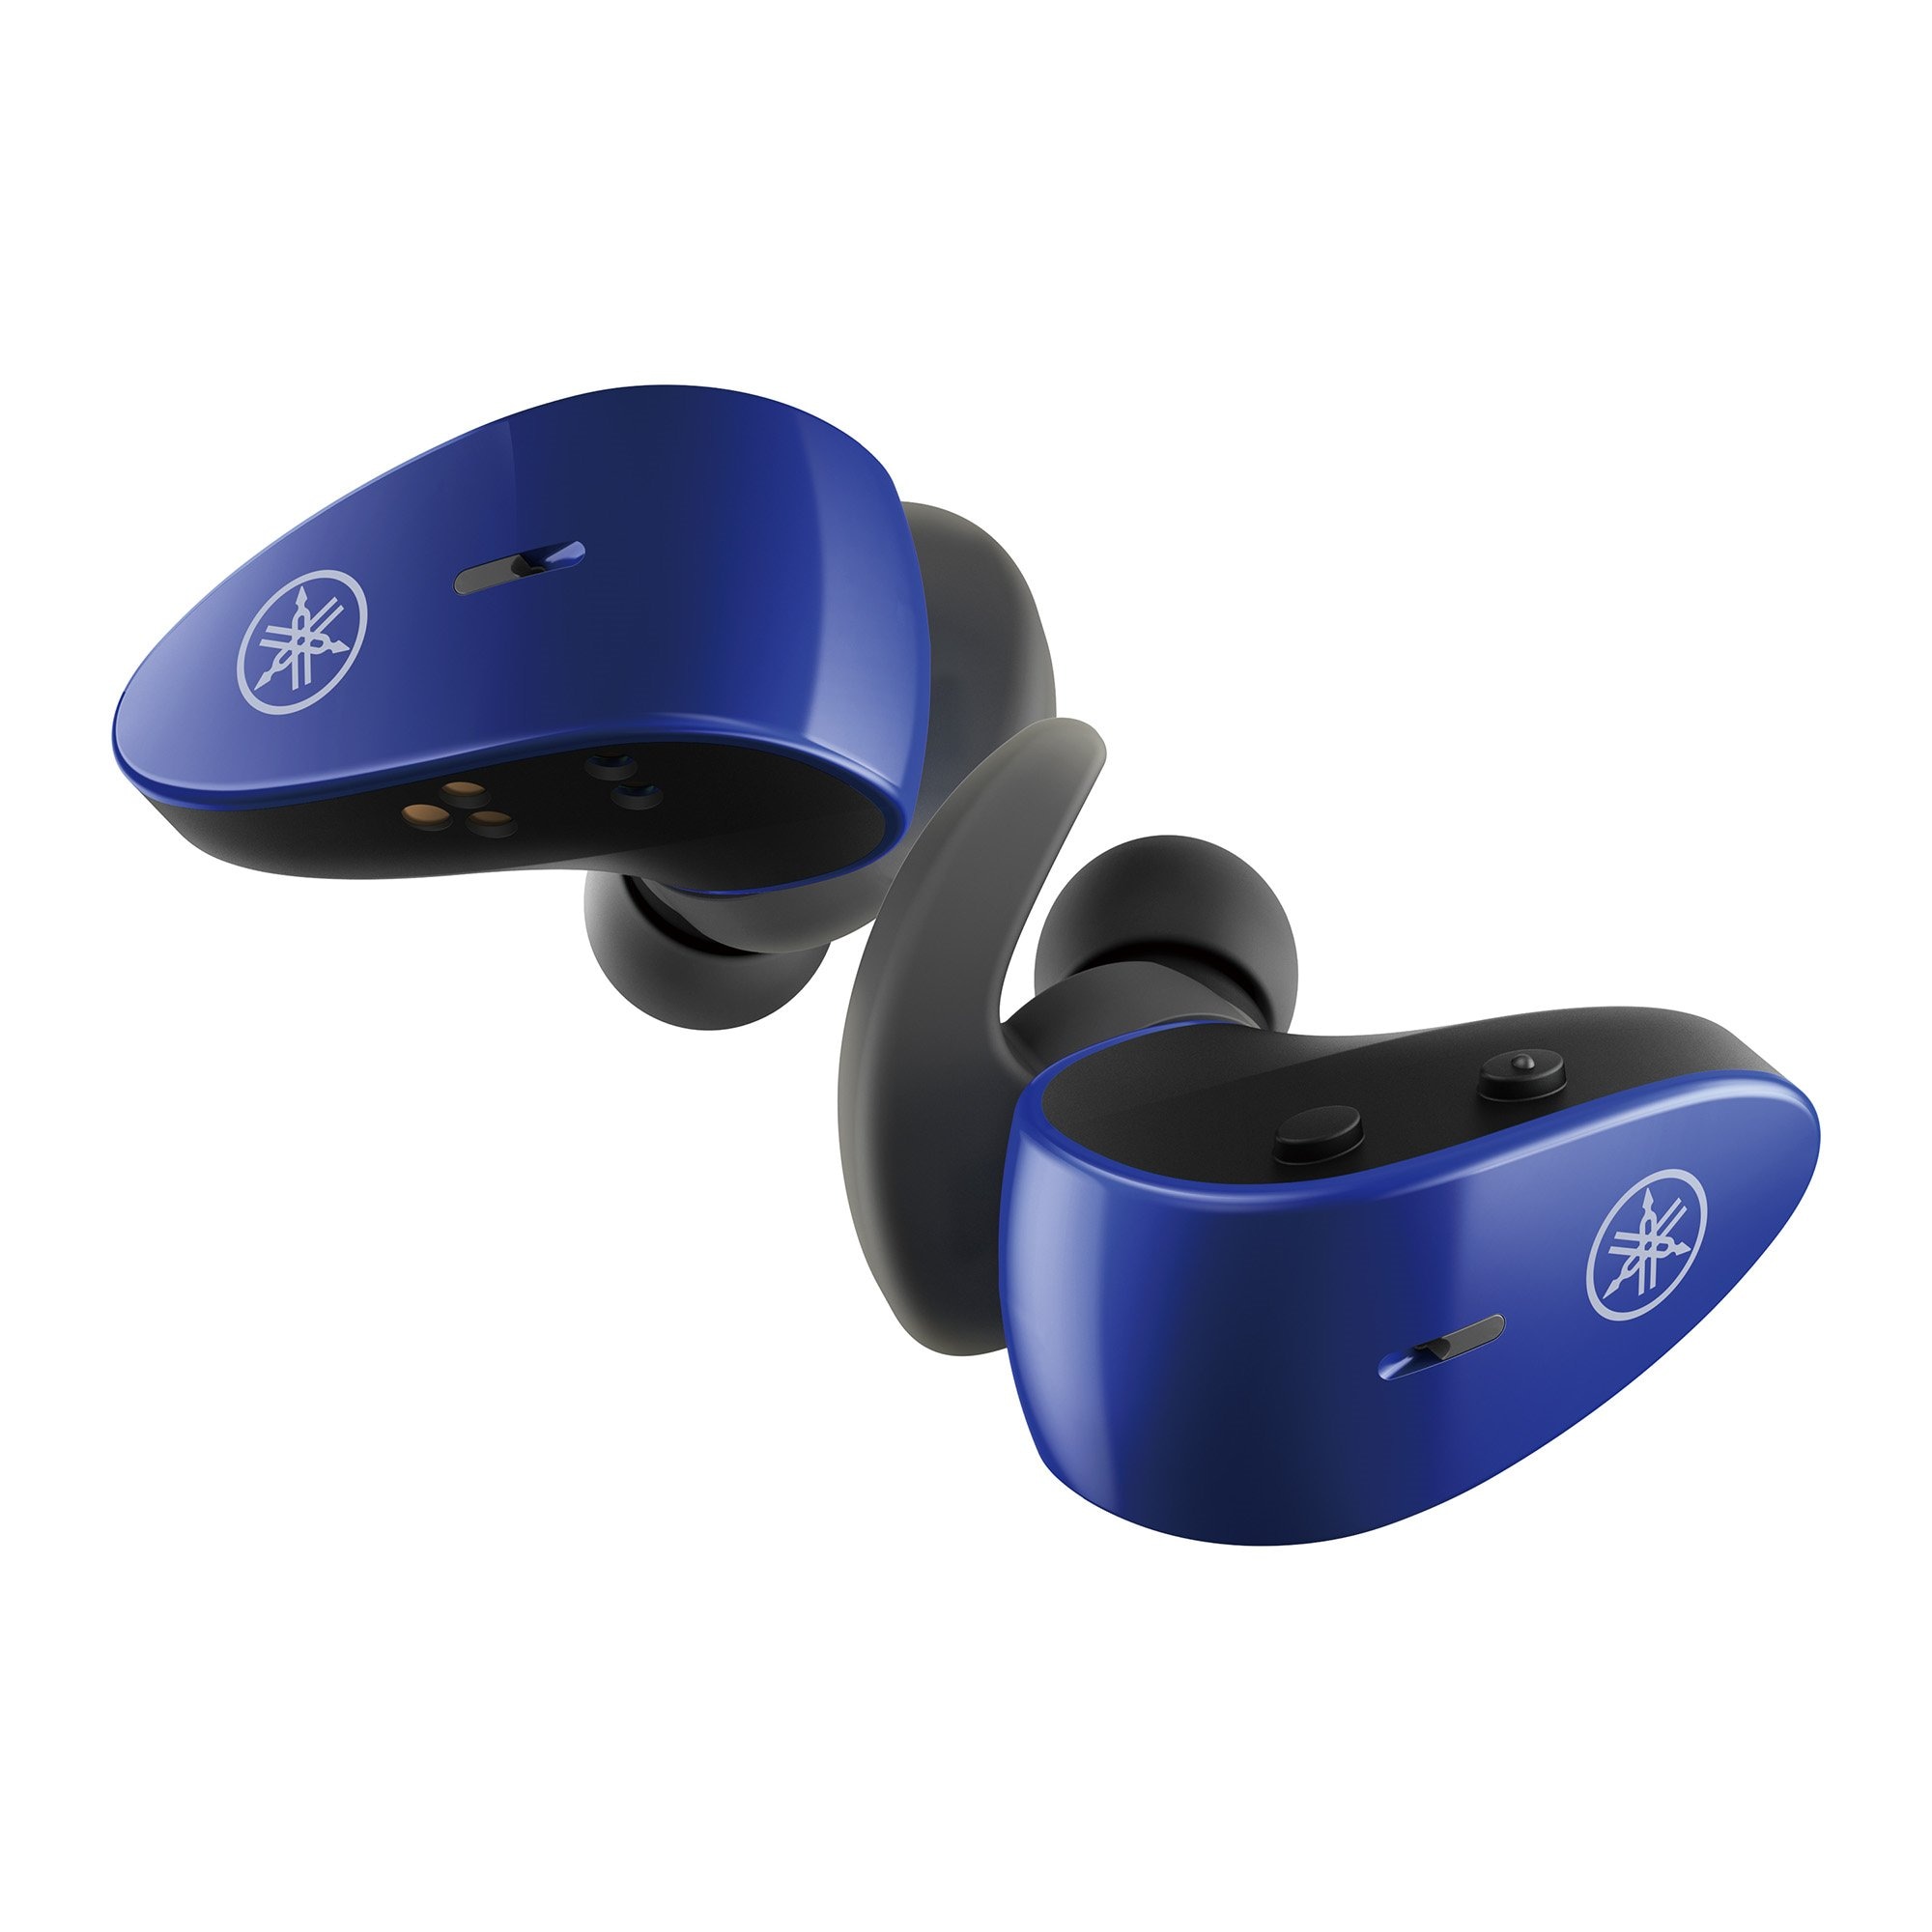 TW-ES5A Wireless Bluetooth Sports Earbuds - Yamaha USA